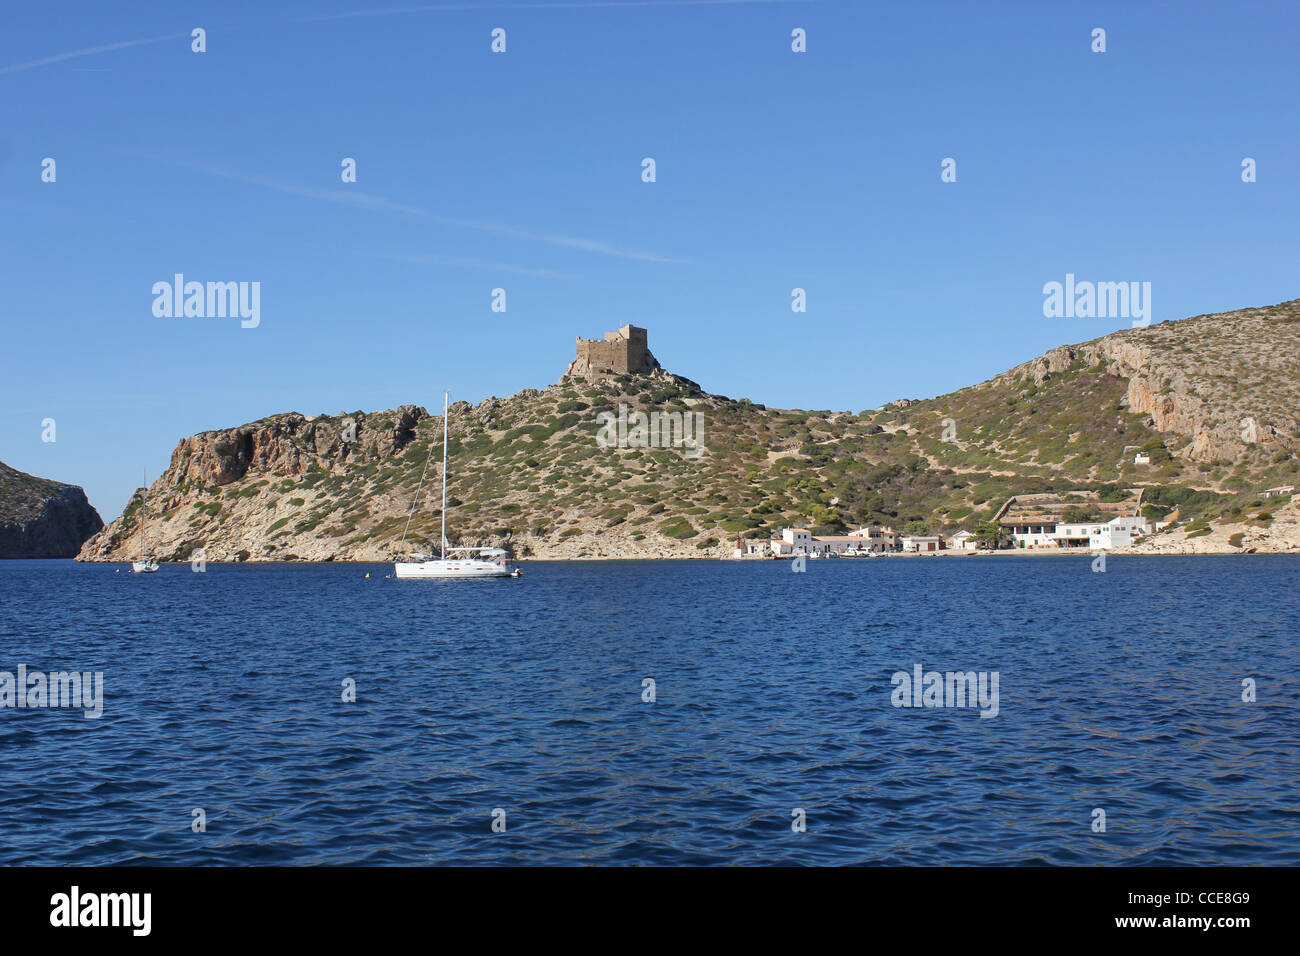 Scene on Cabrera Island, Cabrera Archipelago of islands, a Spanish Natural Park, located South East of Palma de Mallorca Stock Photo